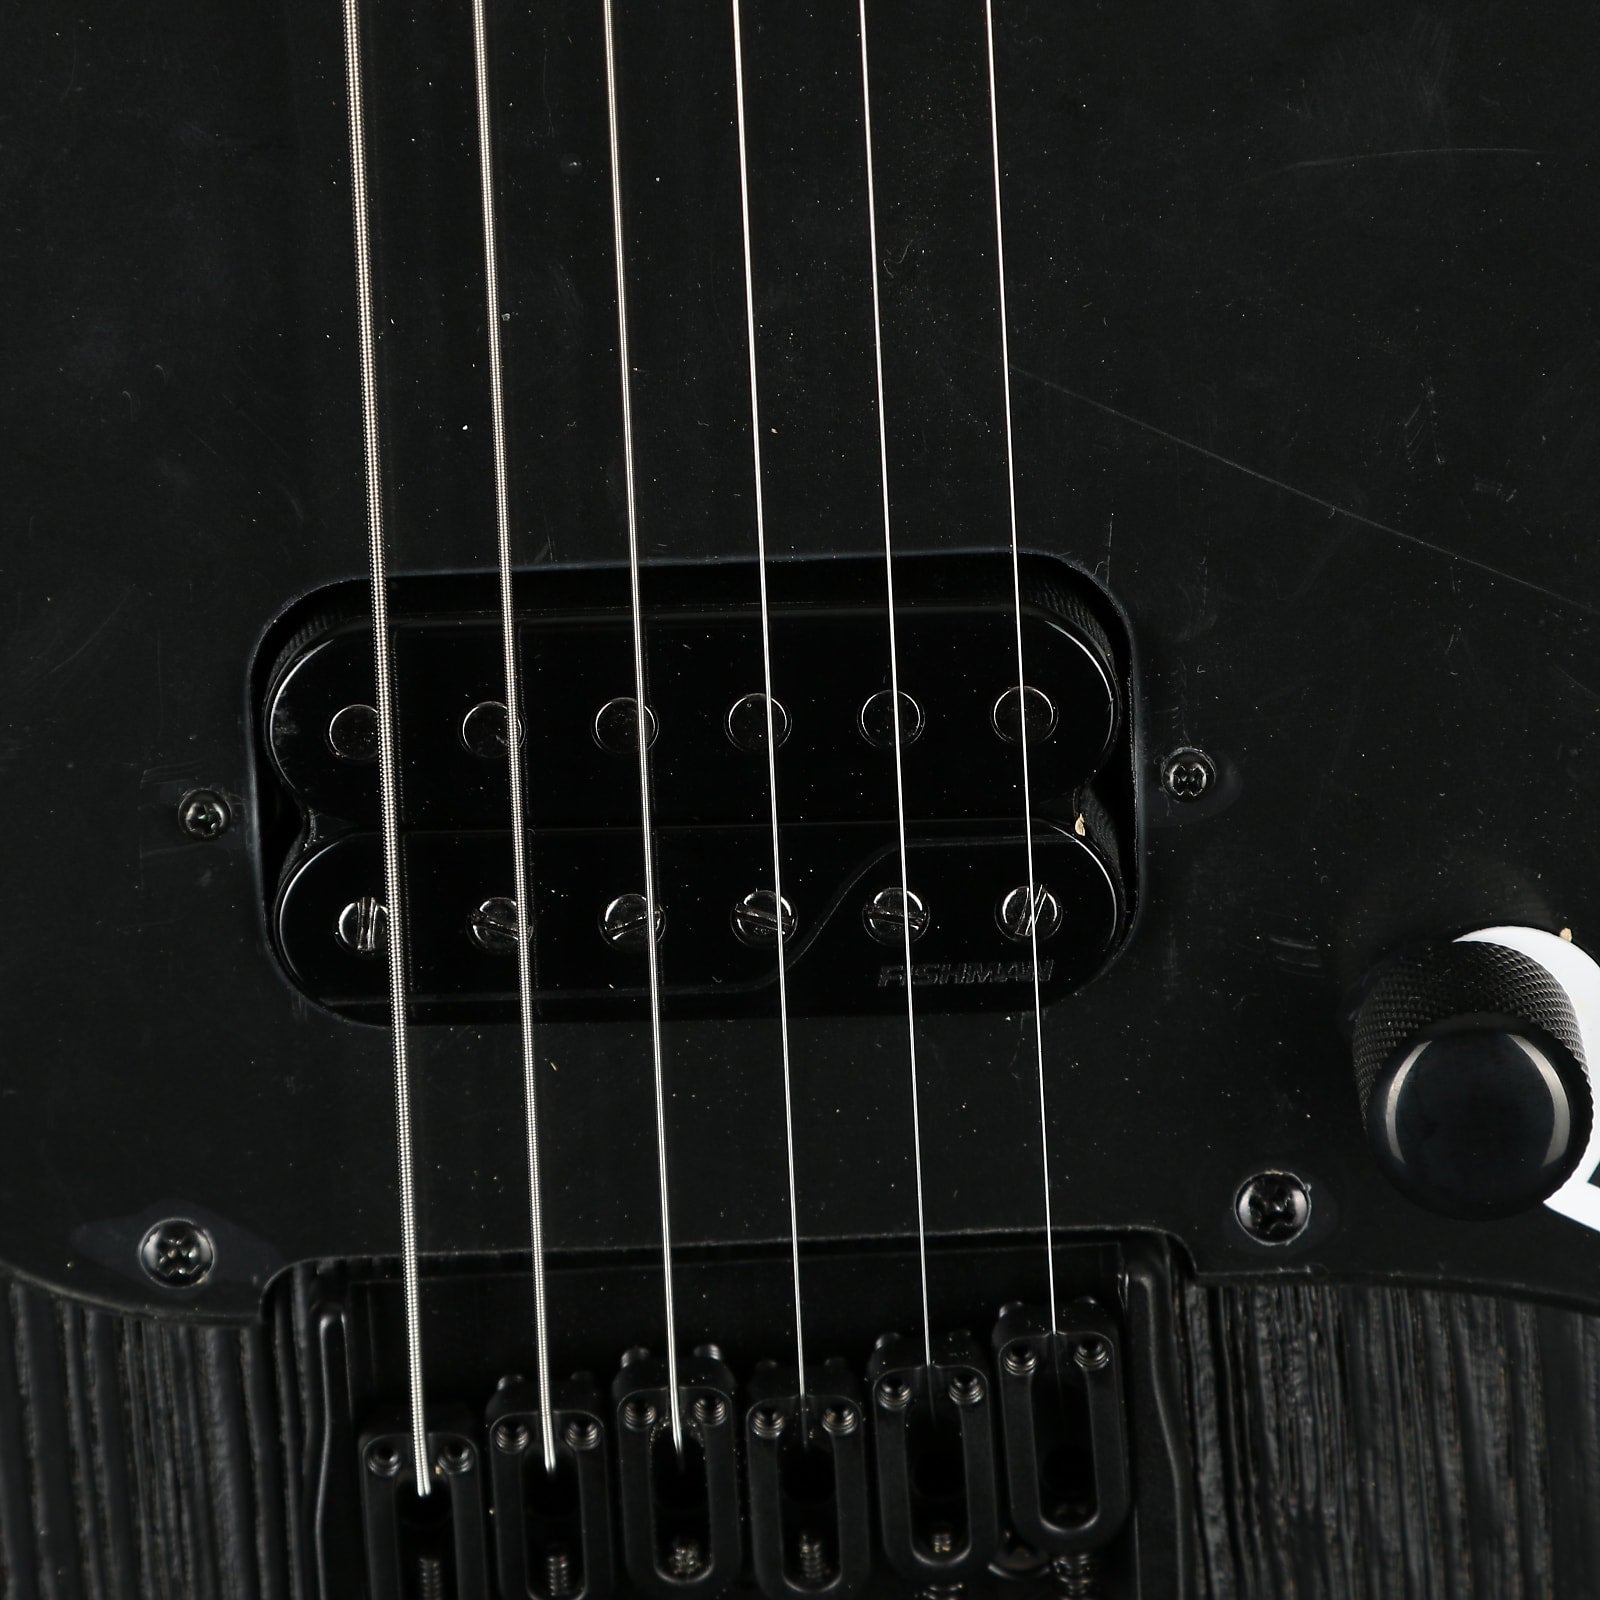 ESP LTD SN-1 HT Electric Guitar - Black Blast